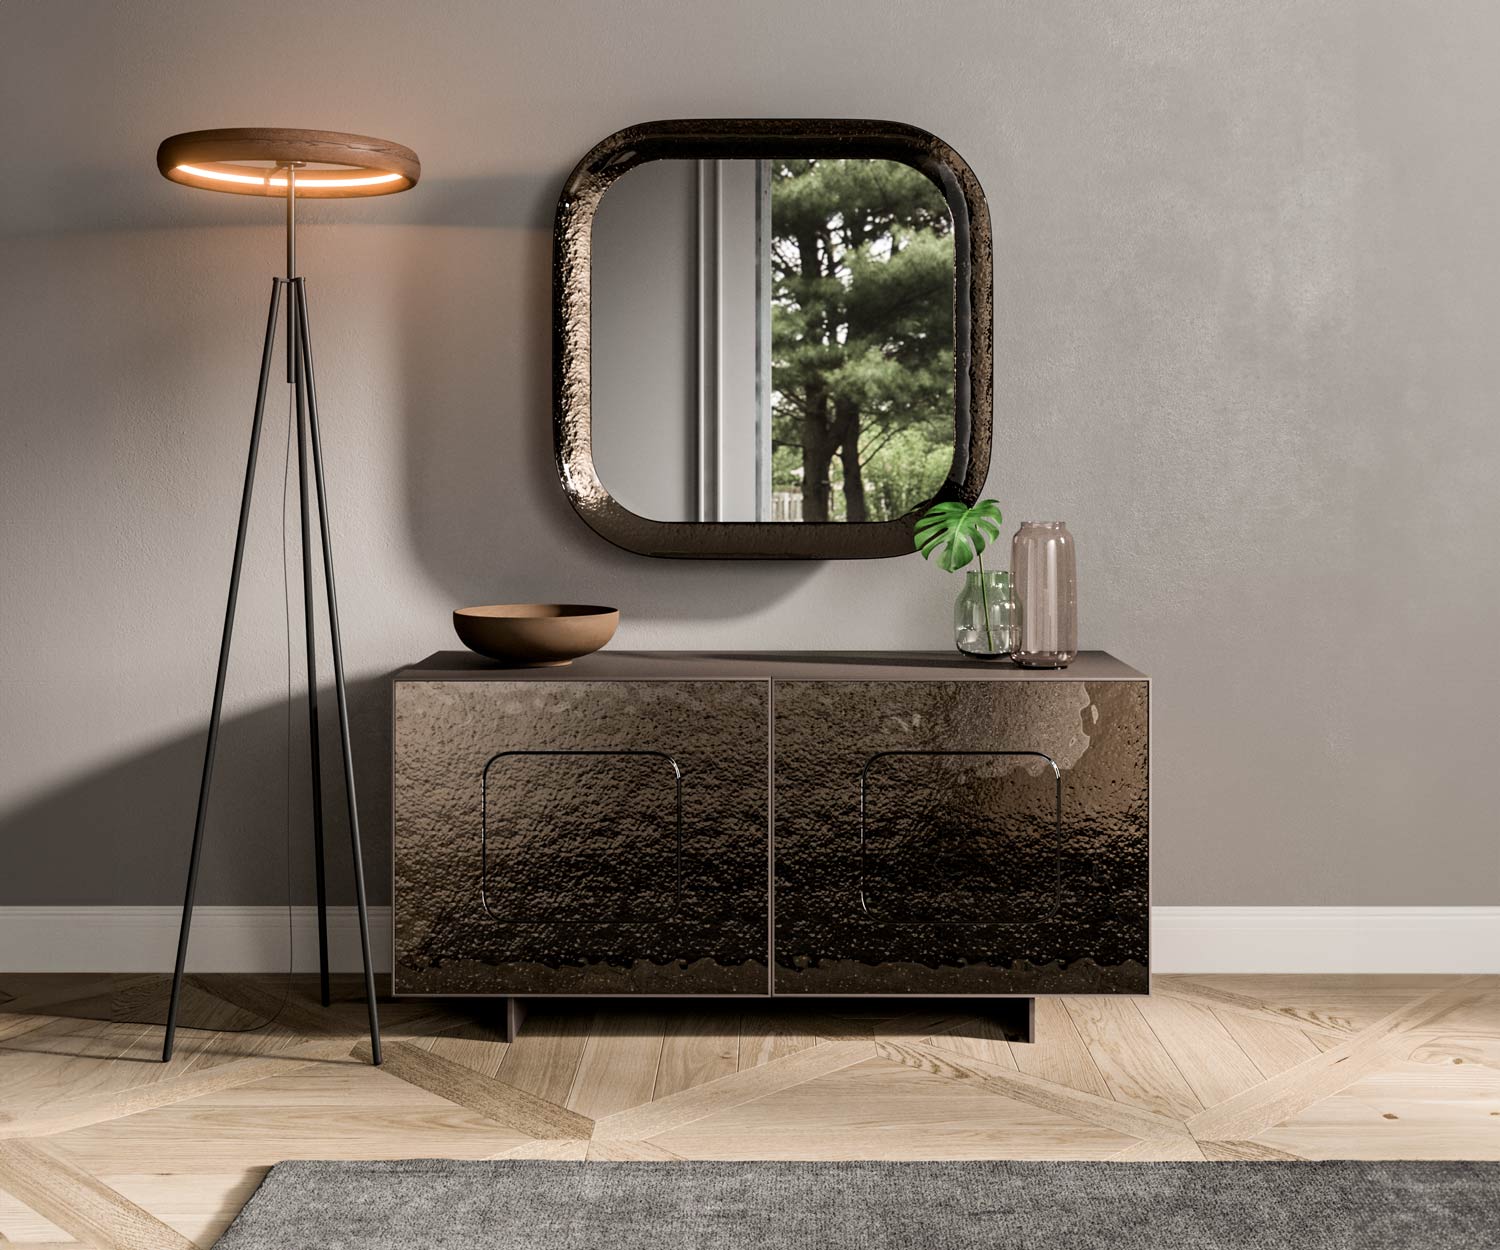 Ozzio Giulia X311 design dressoir met brons goud glas